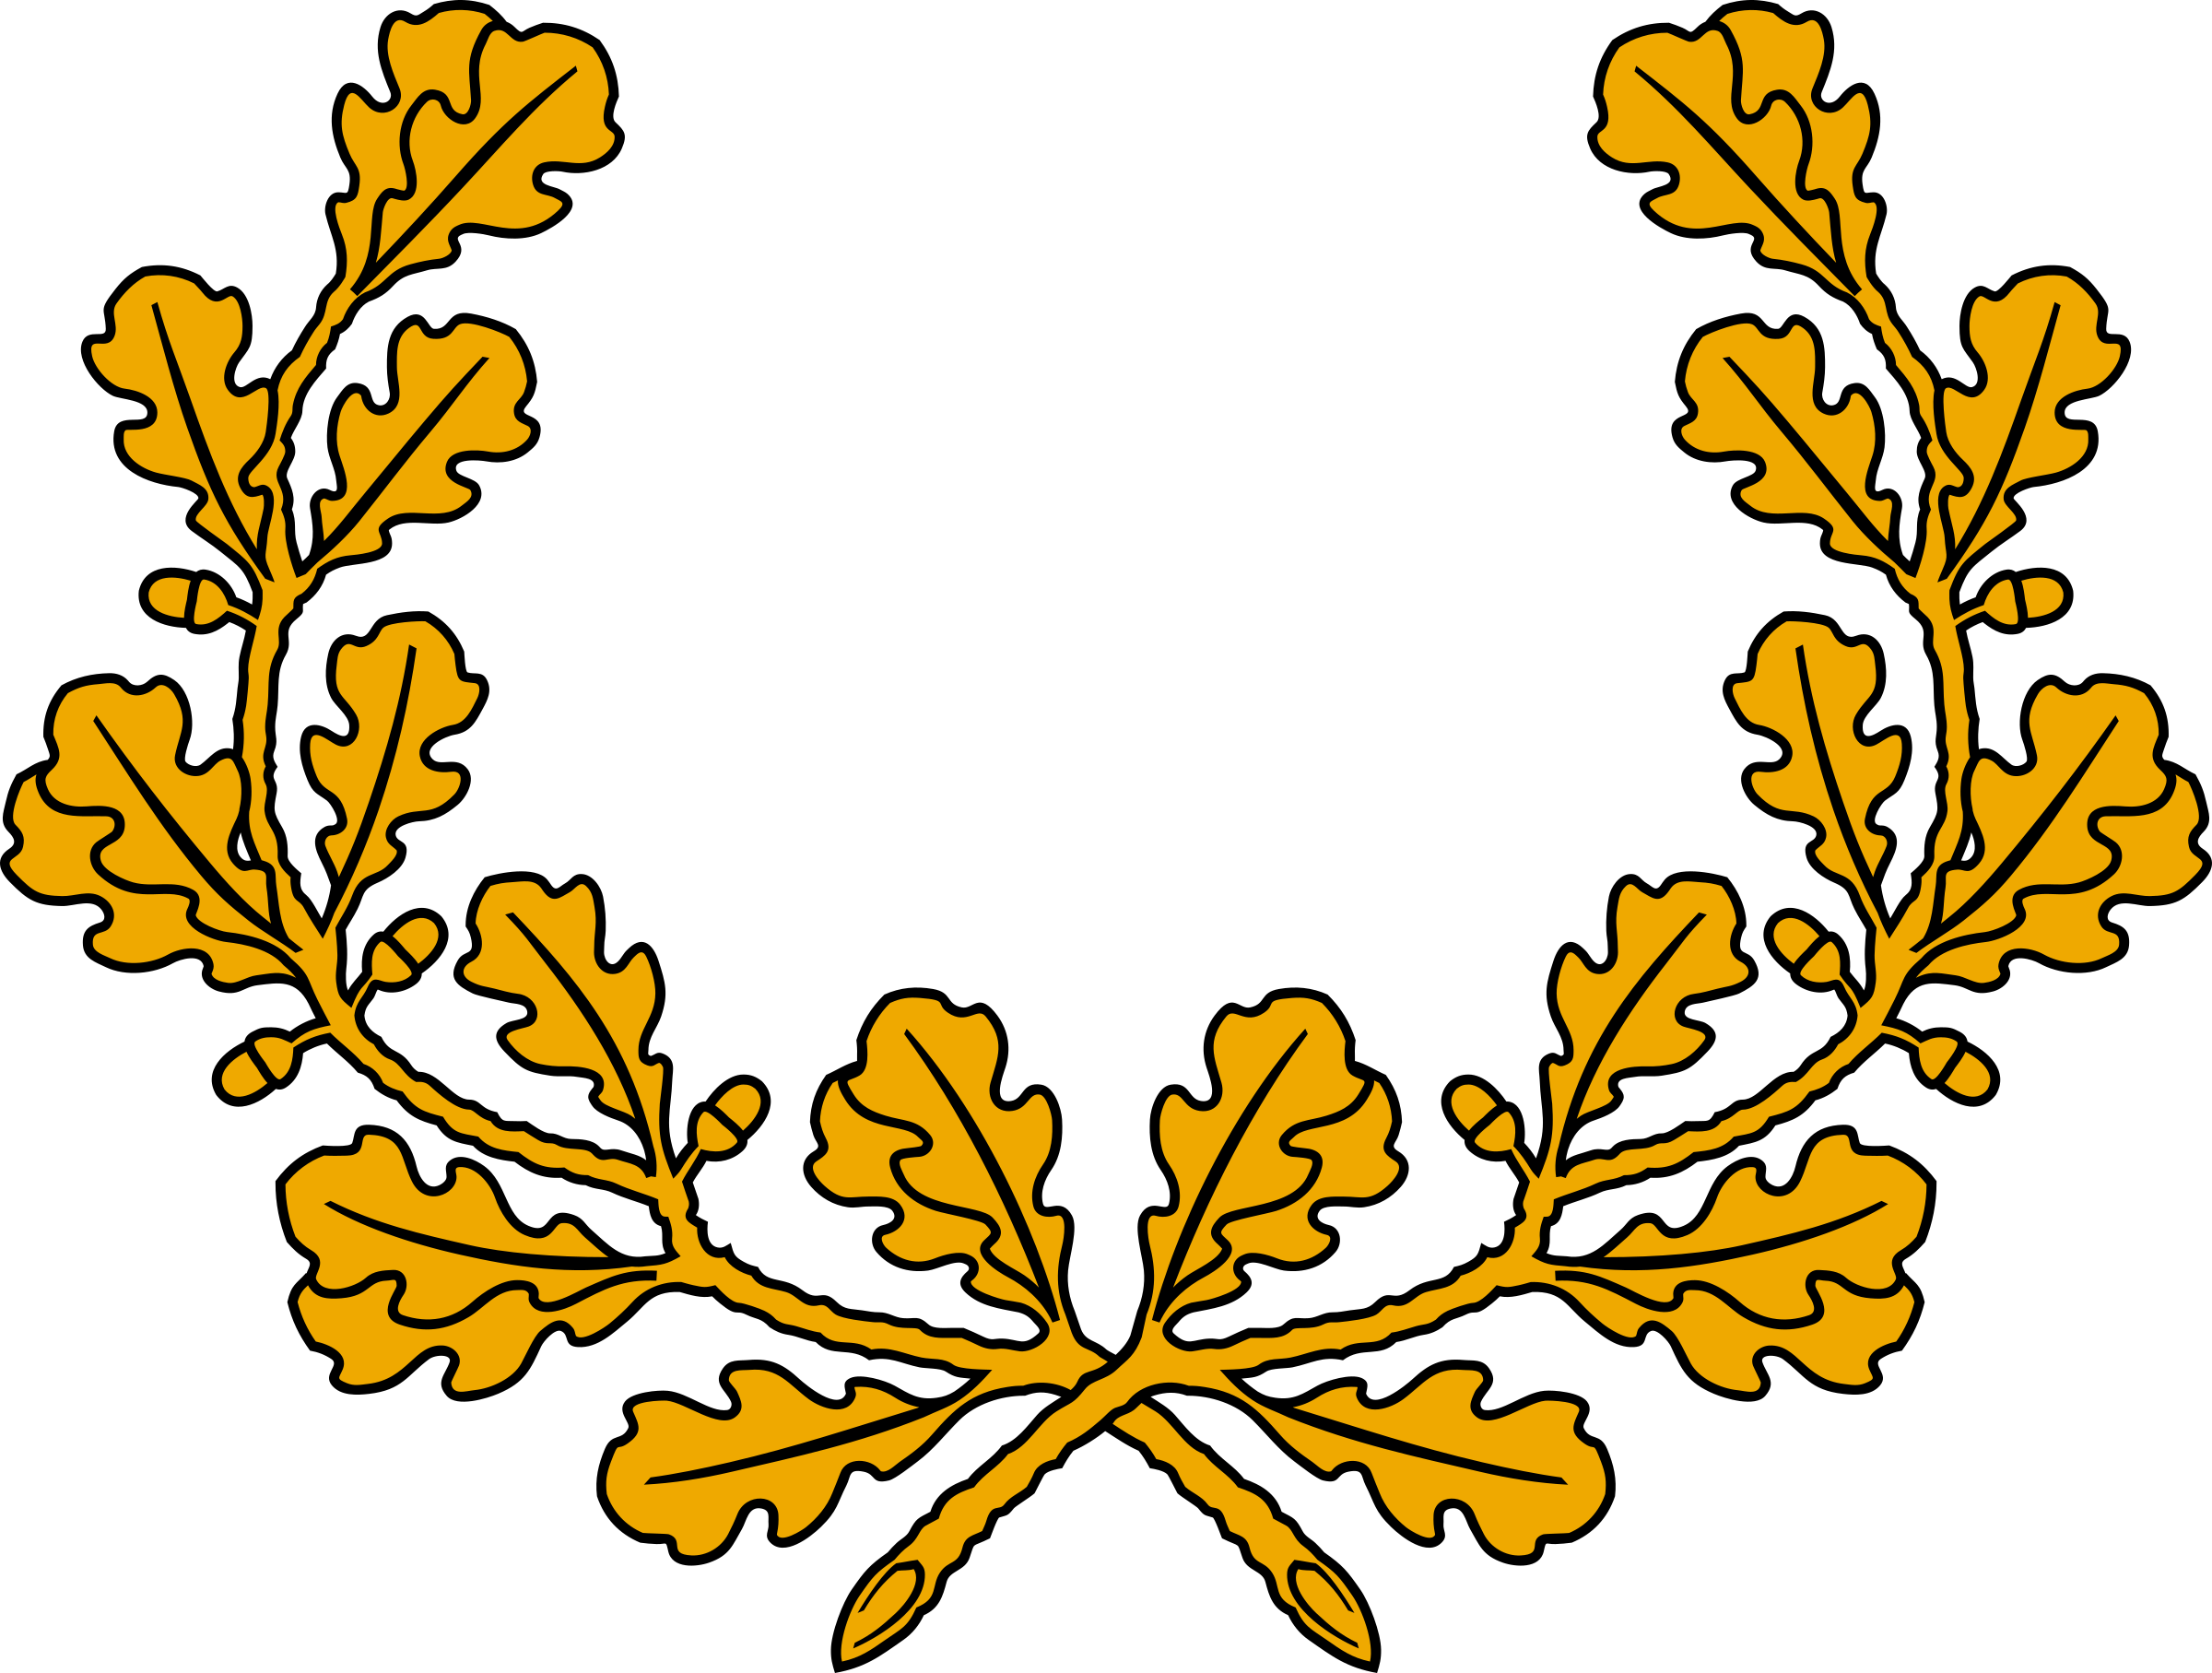 Big Image - Estonian Coat Of Arms (2400x1815)